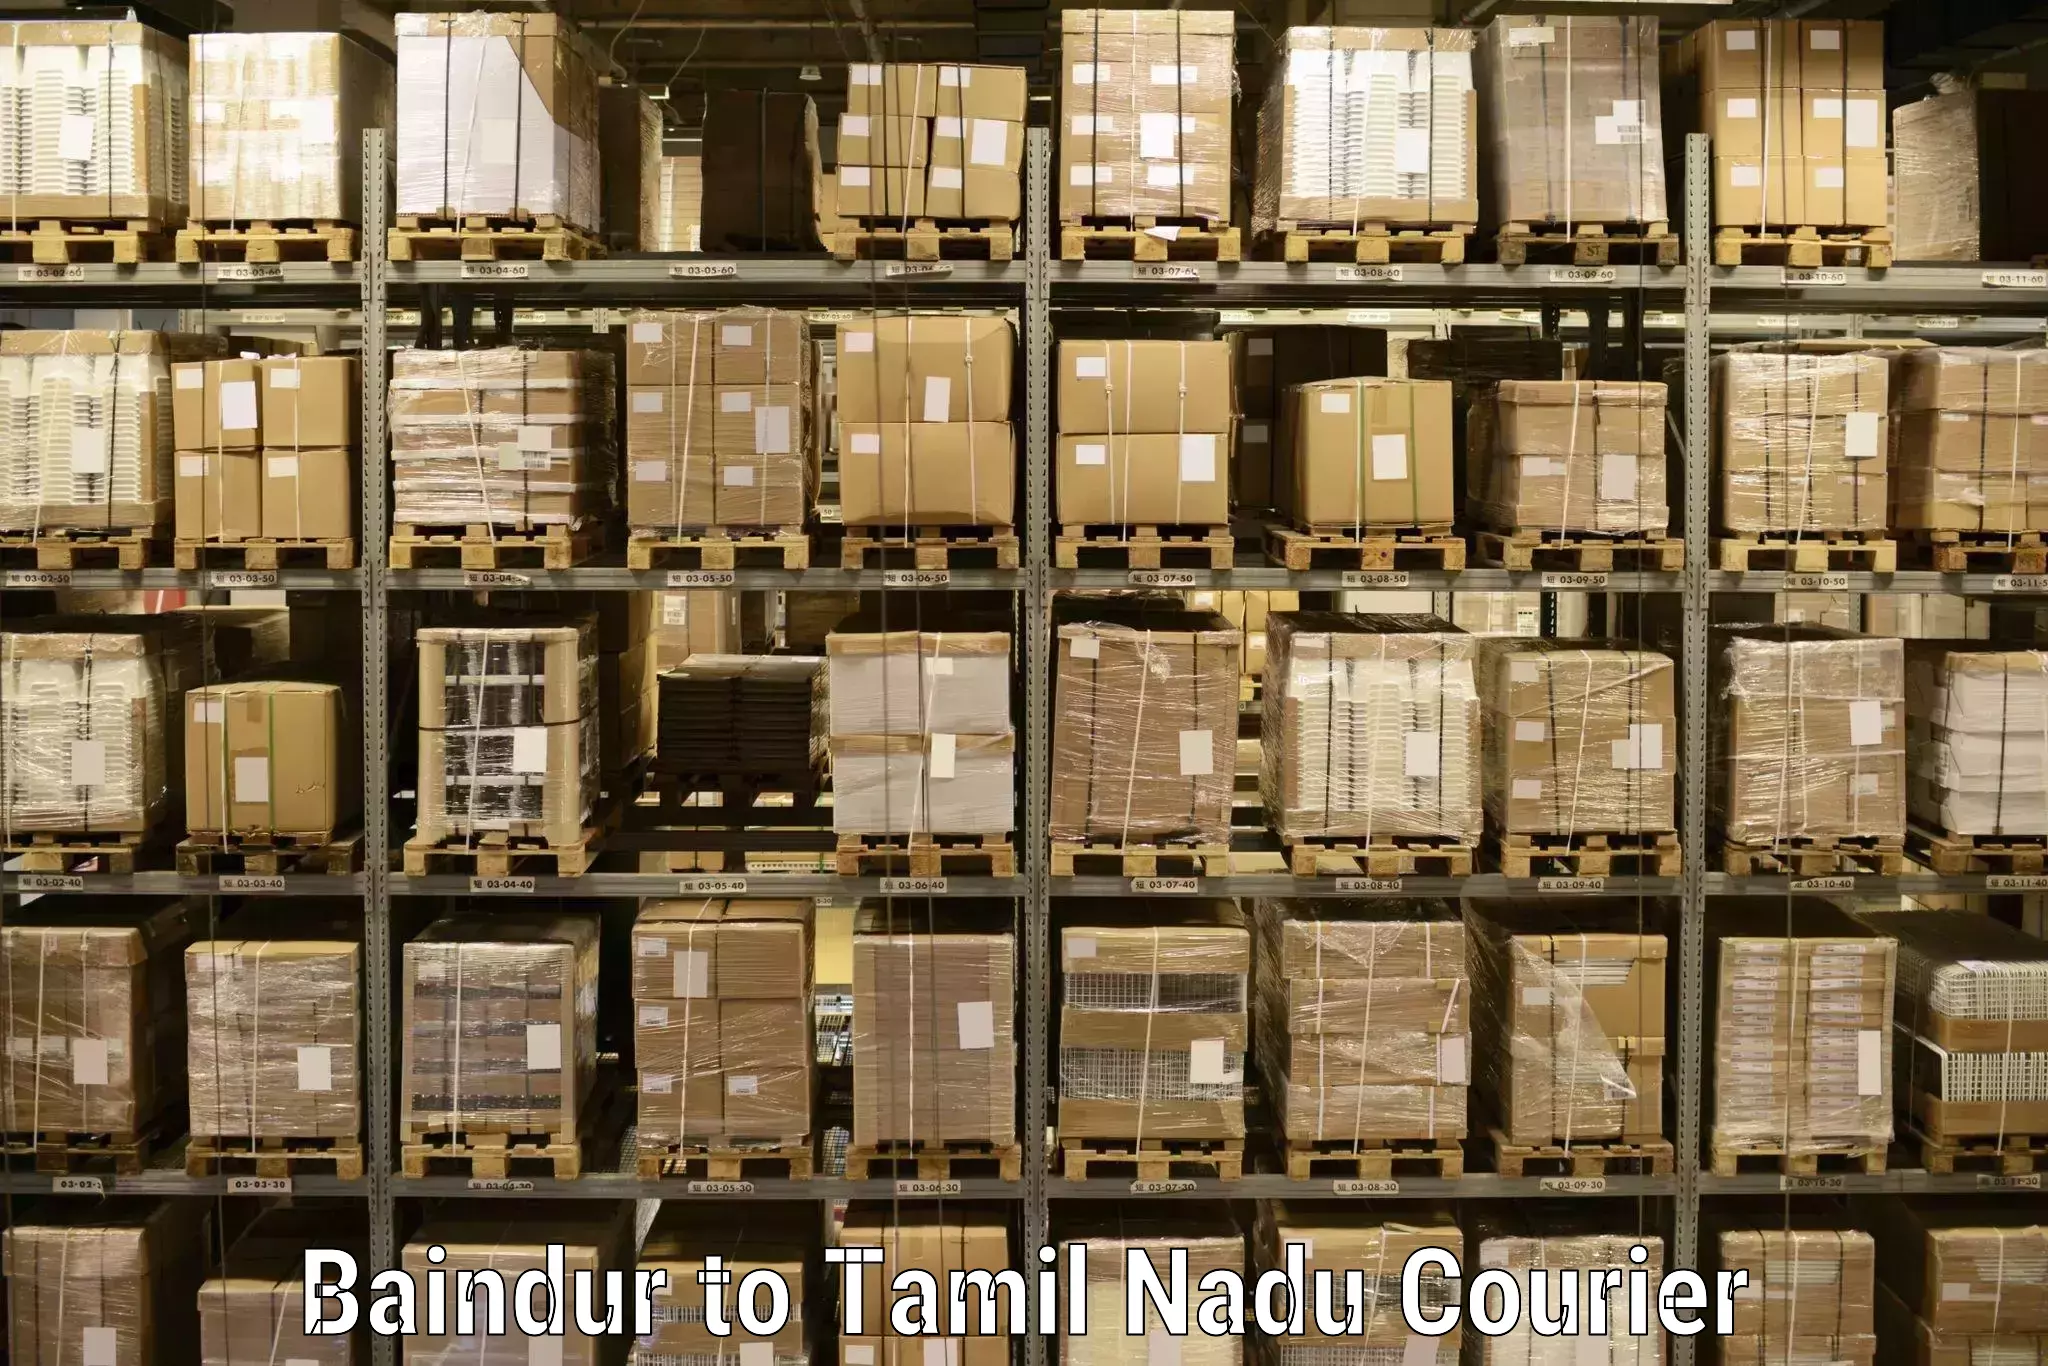 Courier service comparison Baindur to Natham